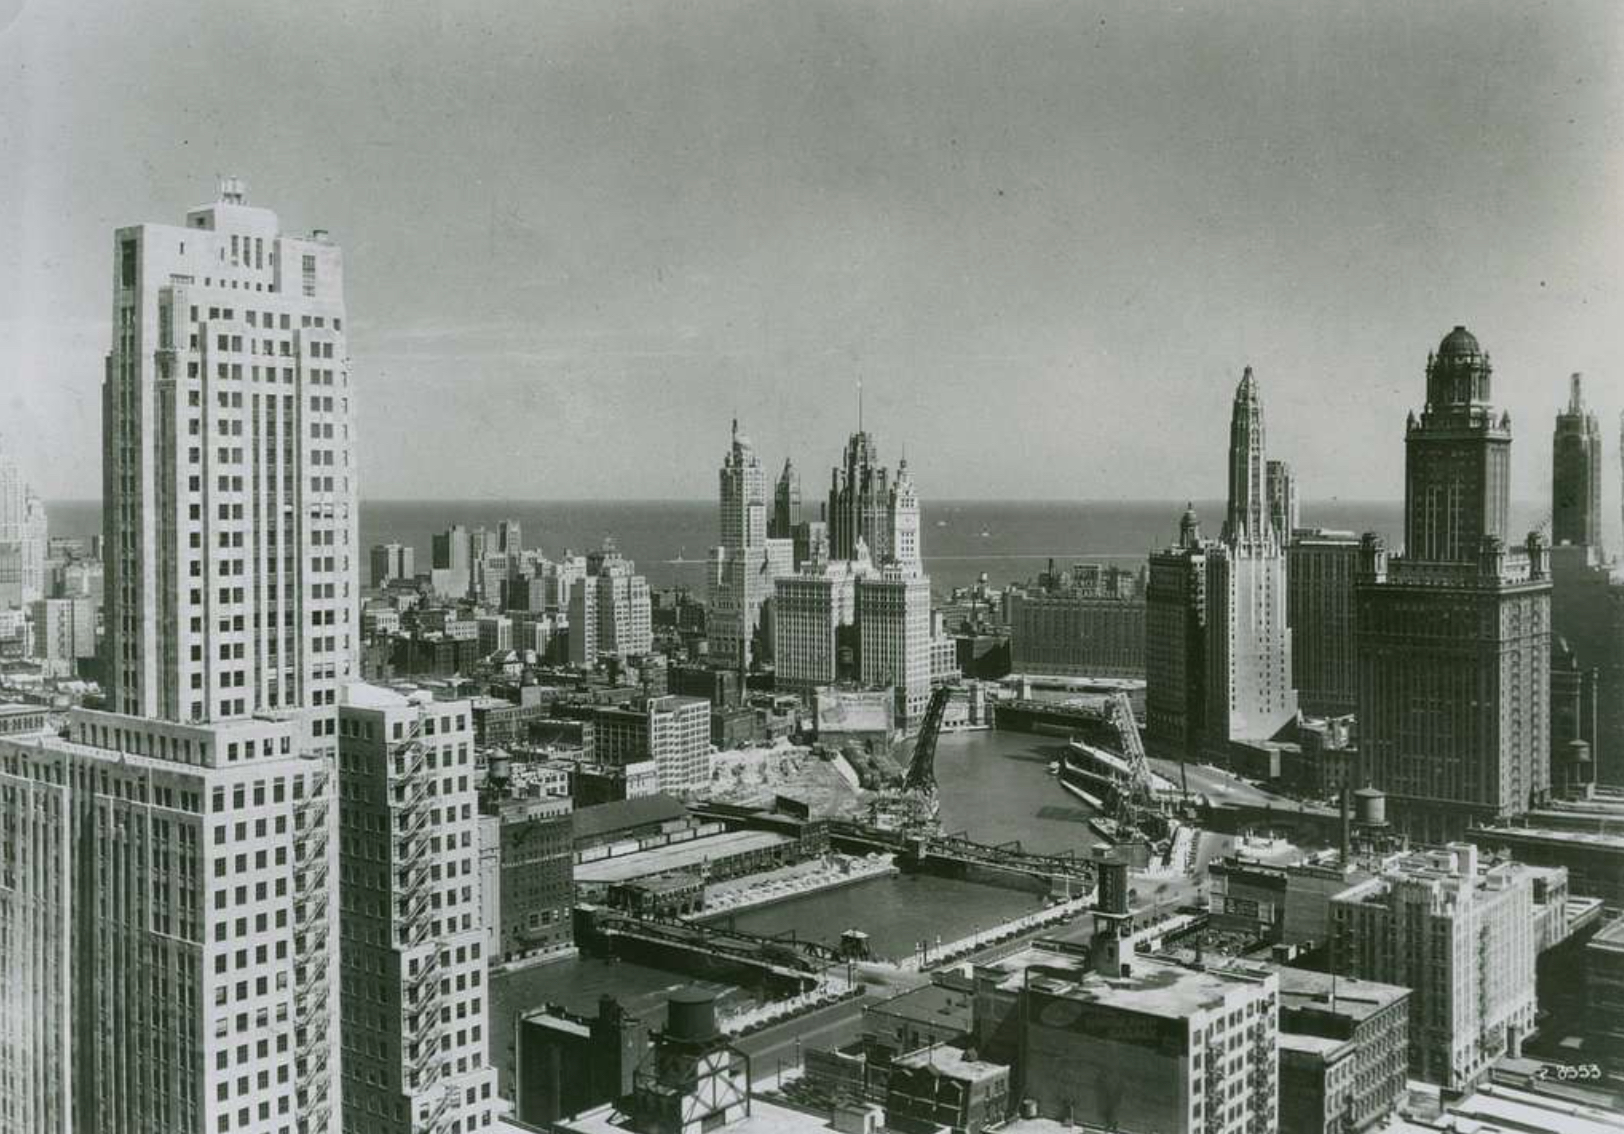 Chicago’s skyline looking towards Lake Michigan, 1940